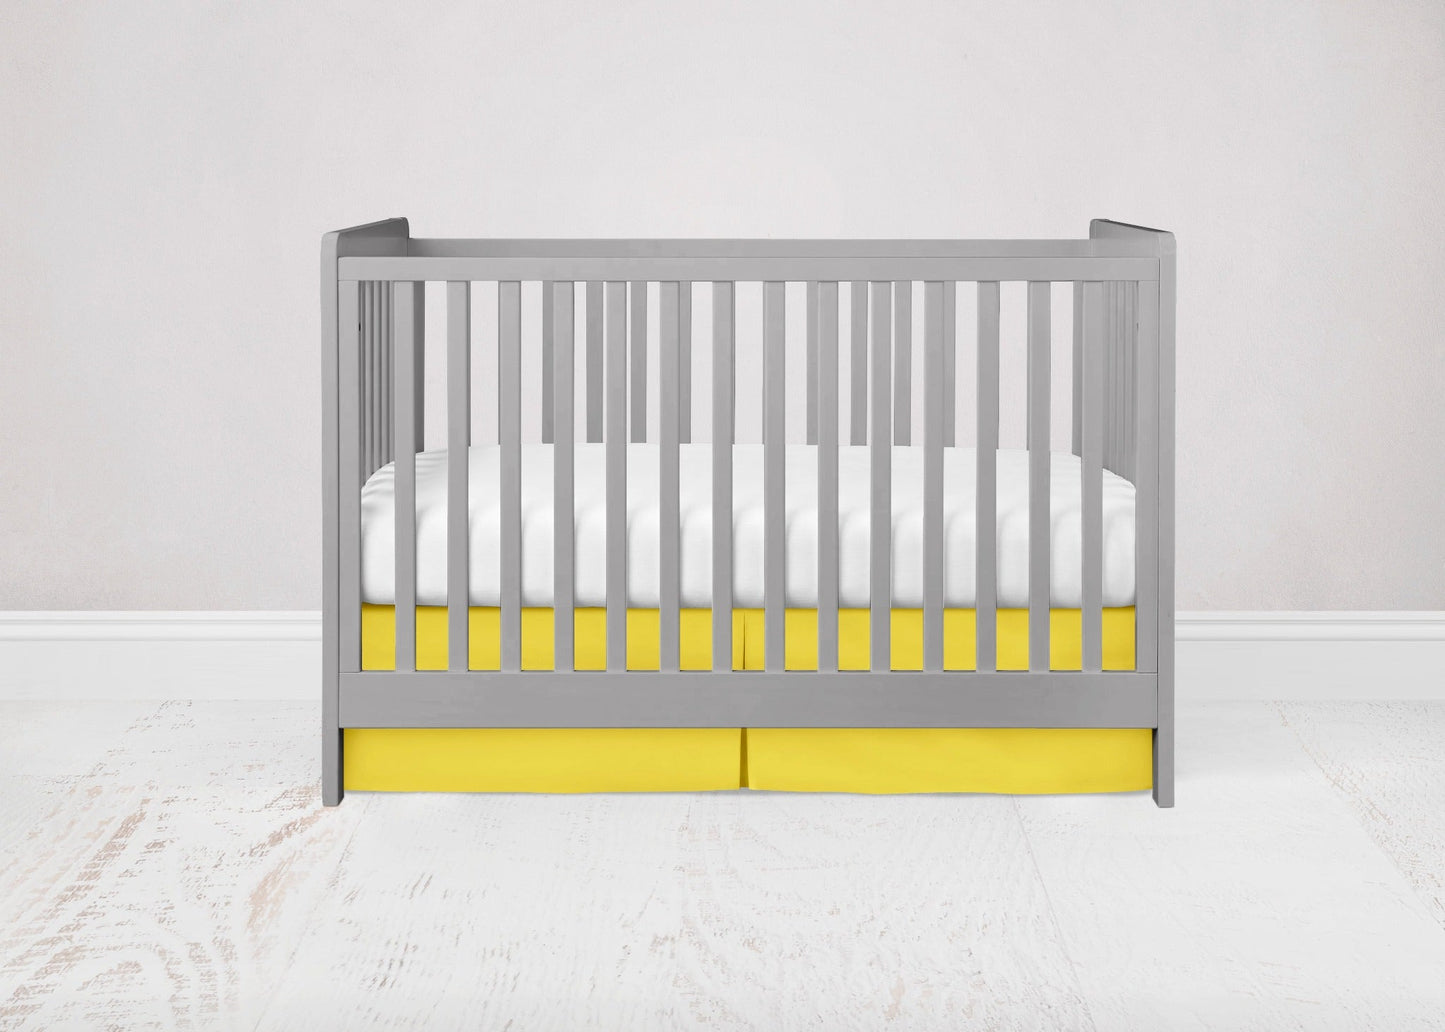 Yellow Nursery Bedding Sets Gender Neutral - The Creative Raccoon